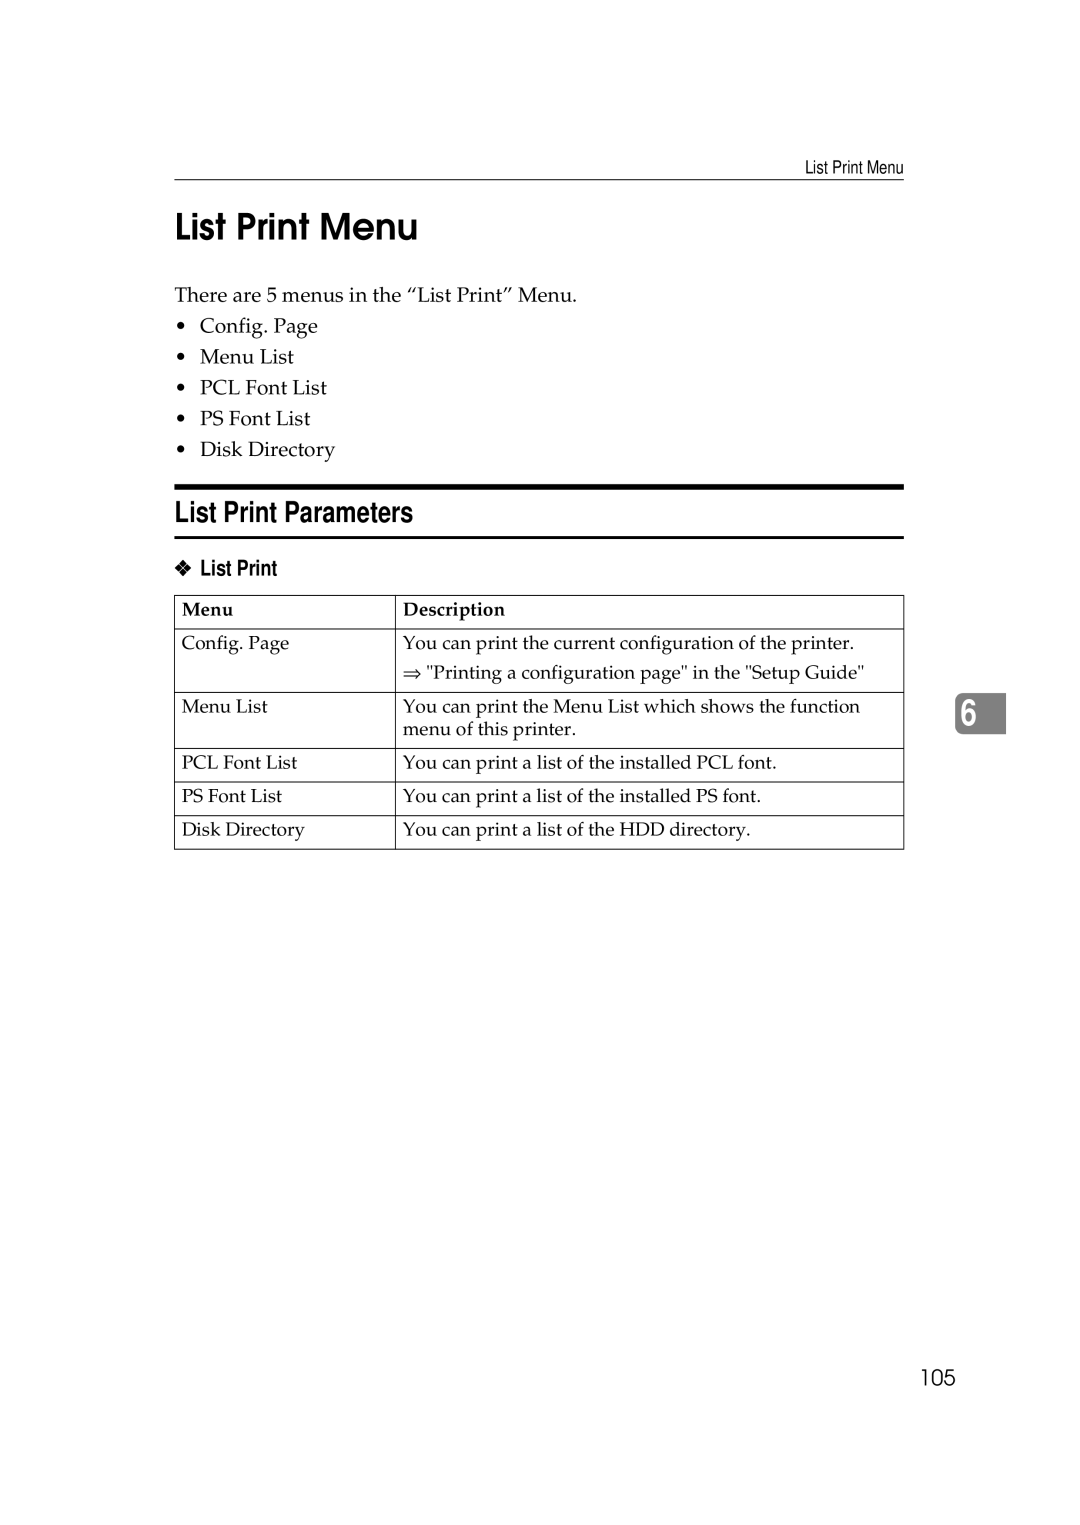 Ricoh Aficio AP2700 operating instructions List Print Menu, List Print Parameters, Description 